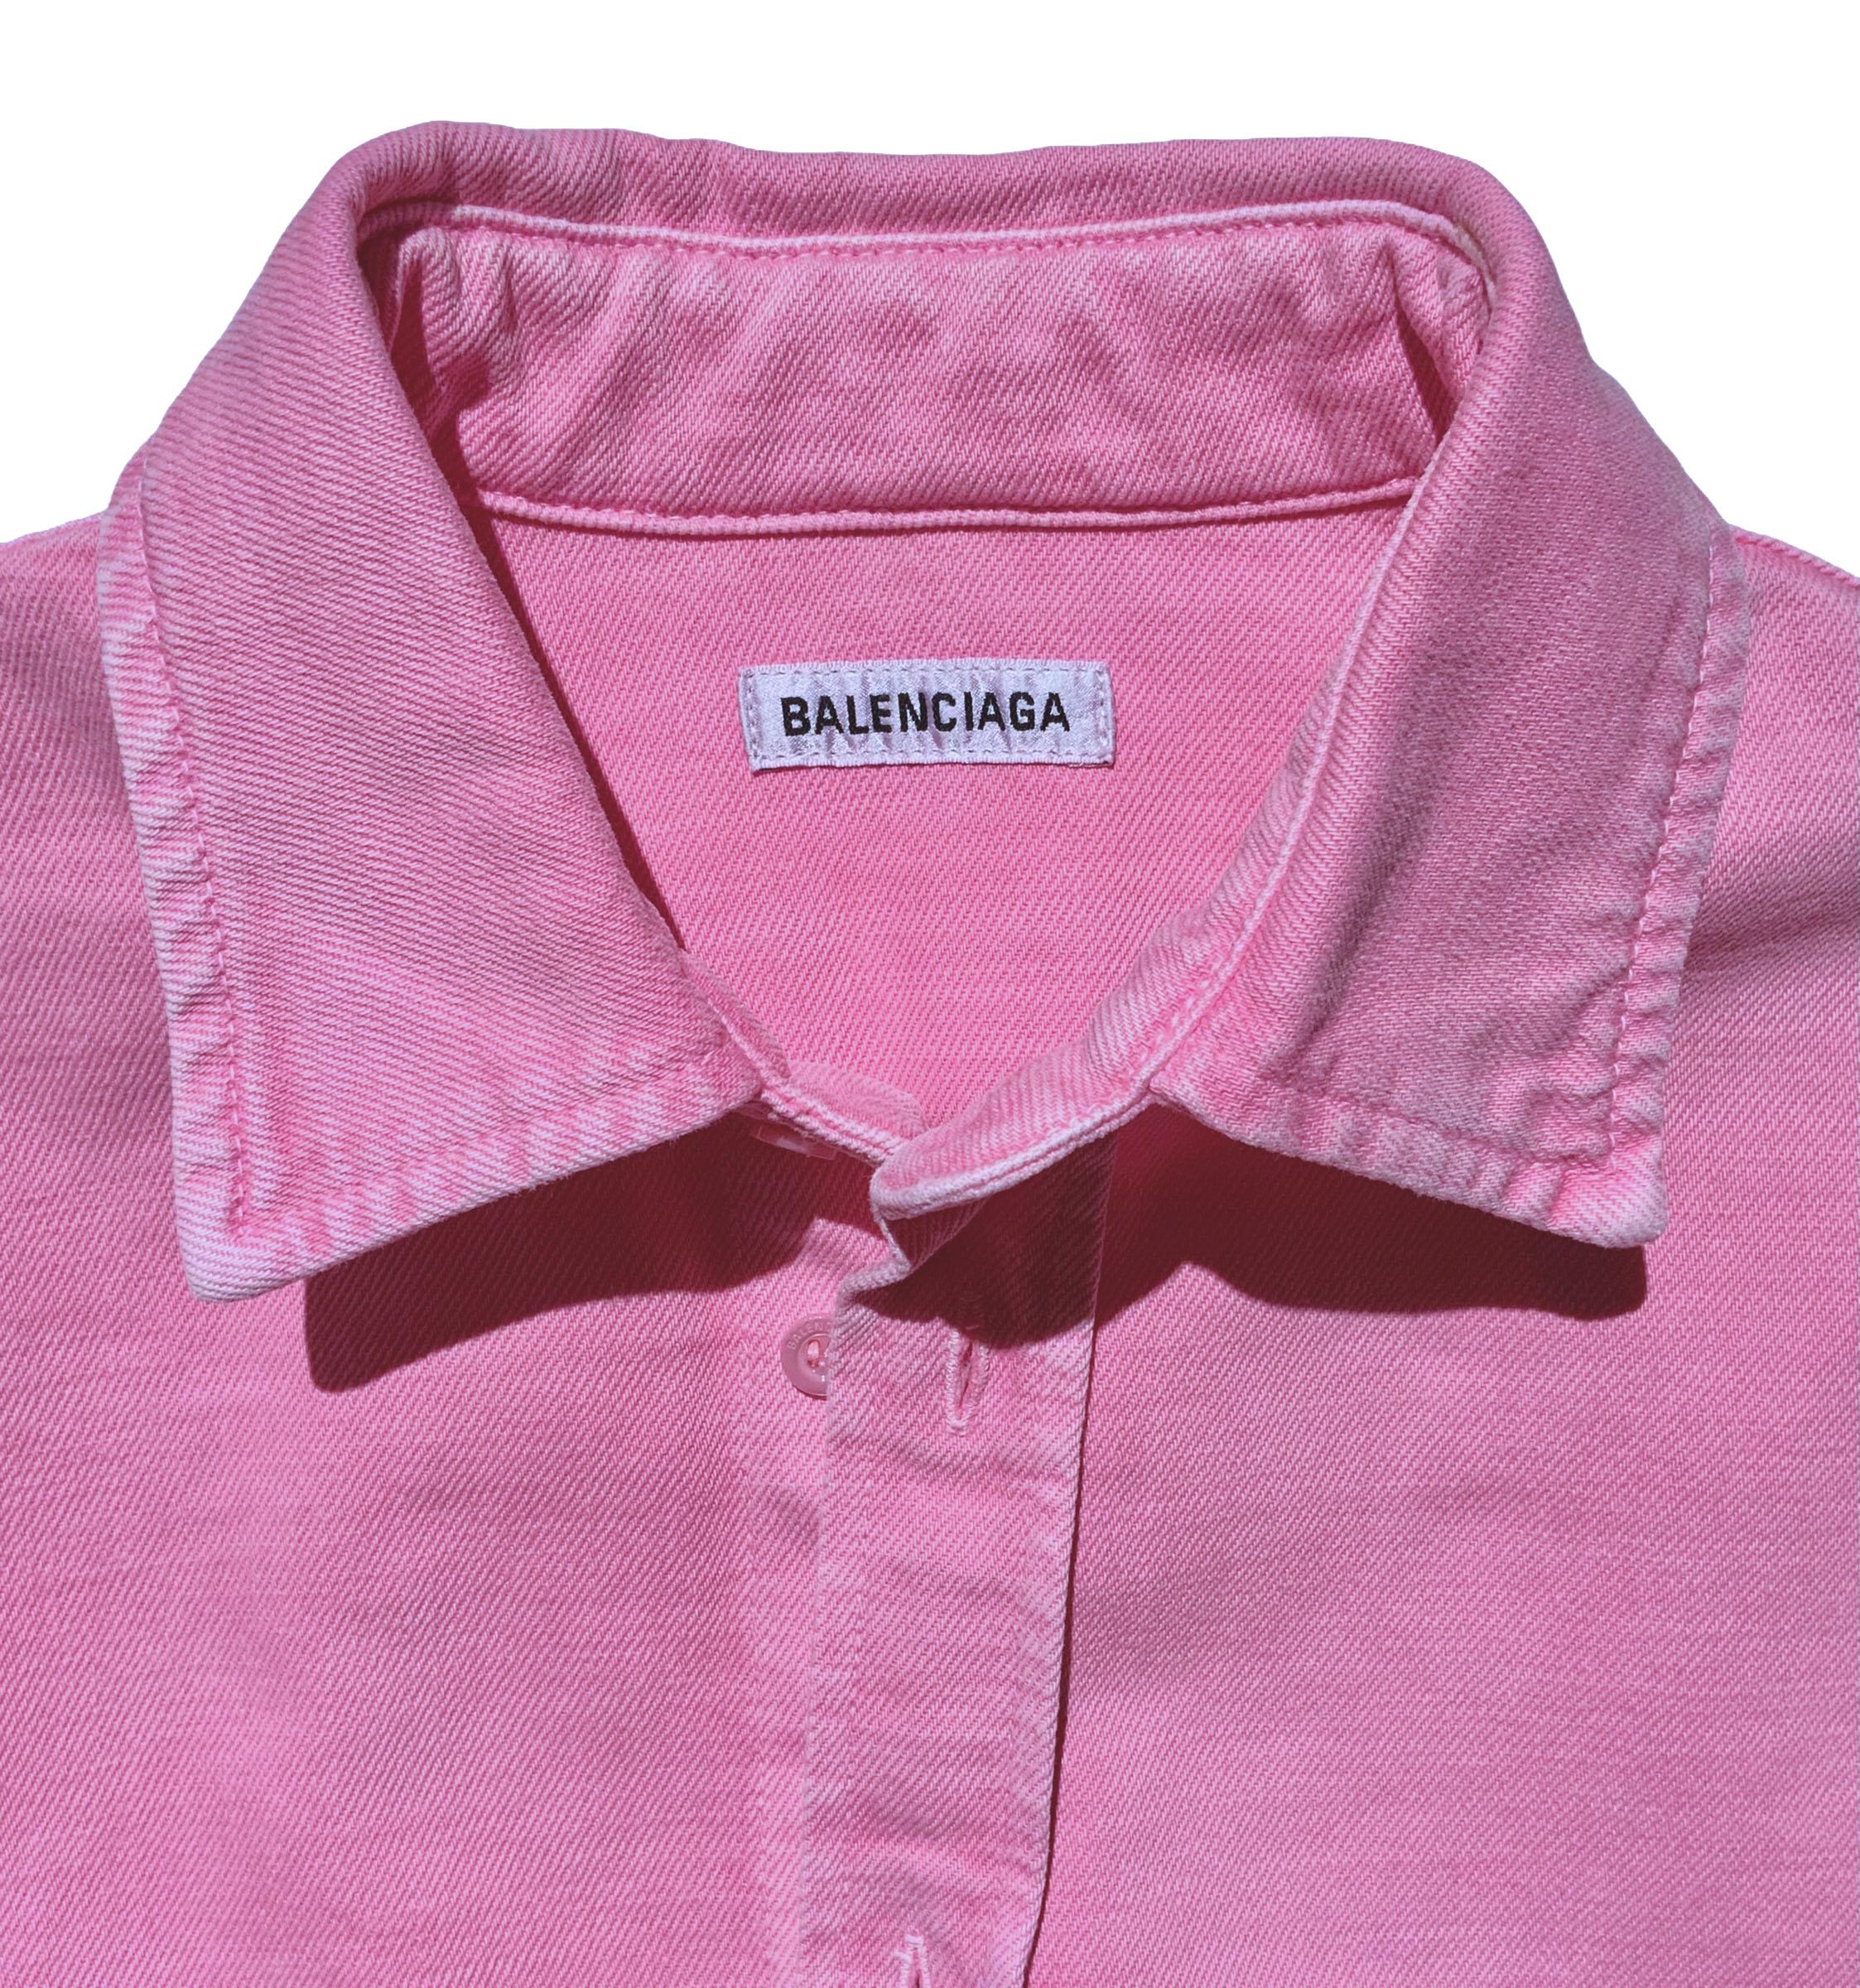 balenciaga pink denim shirt